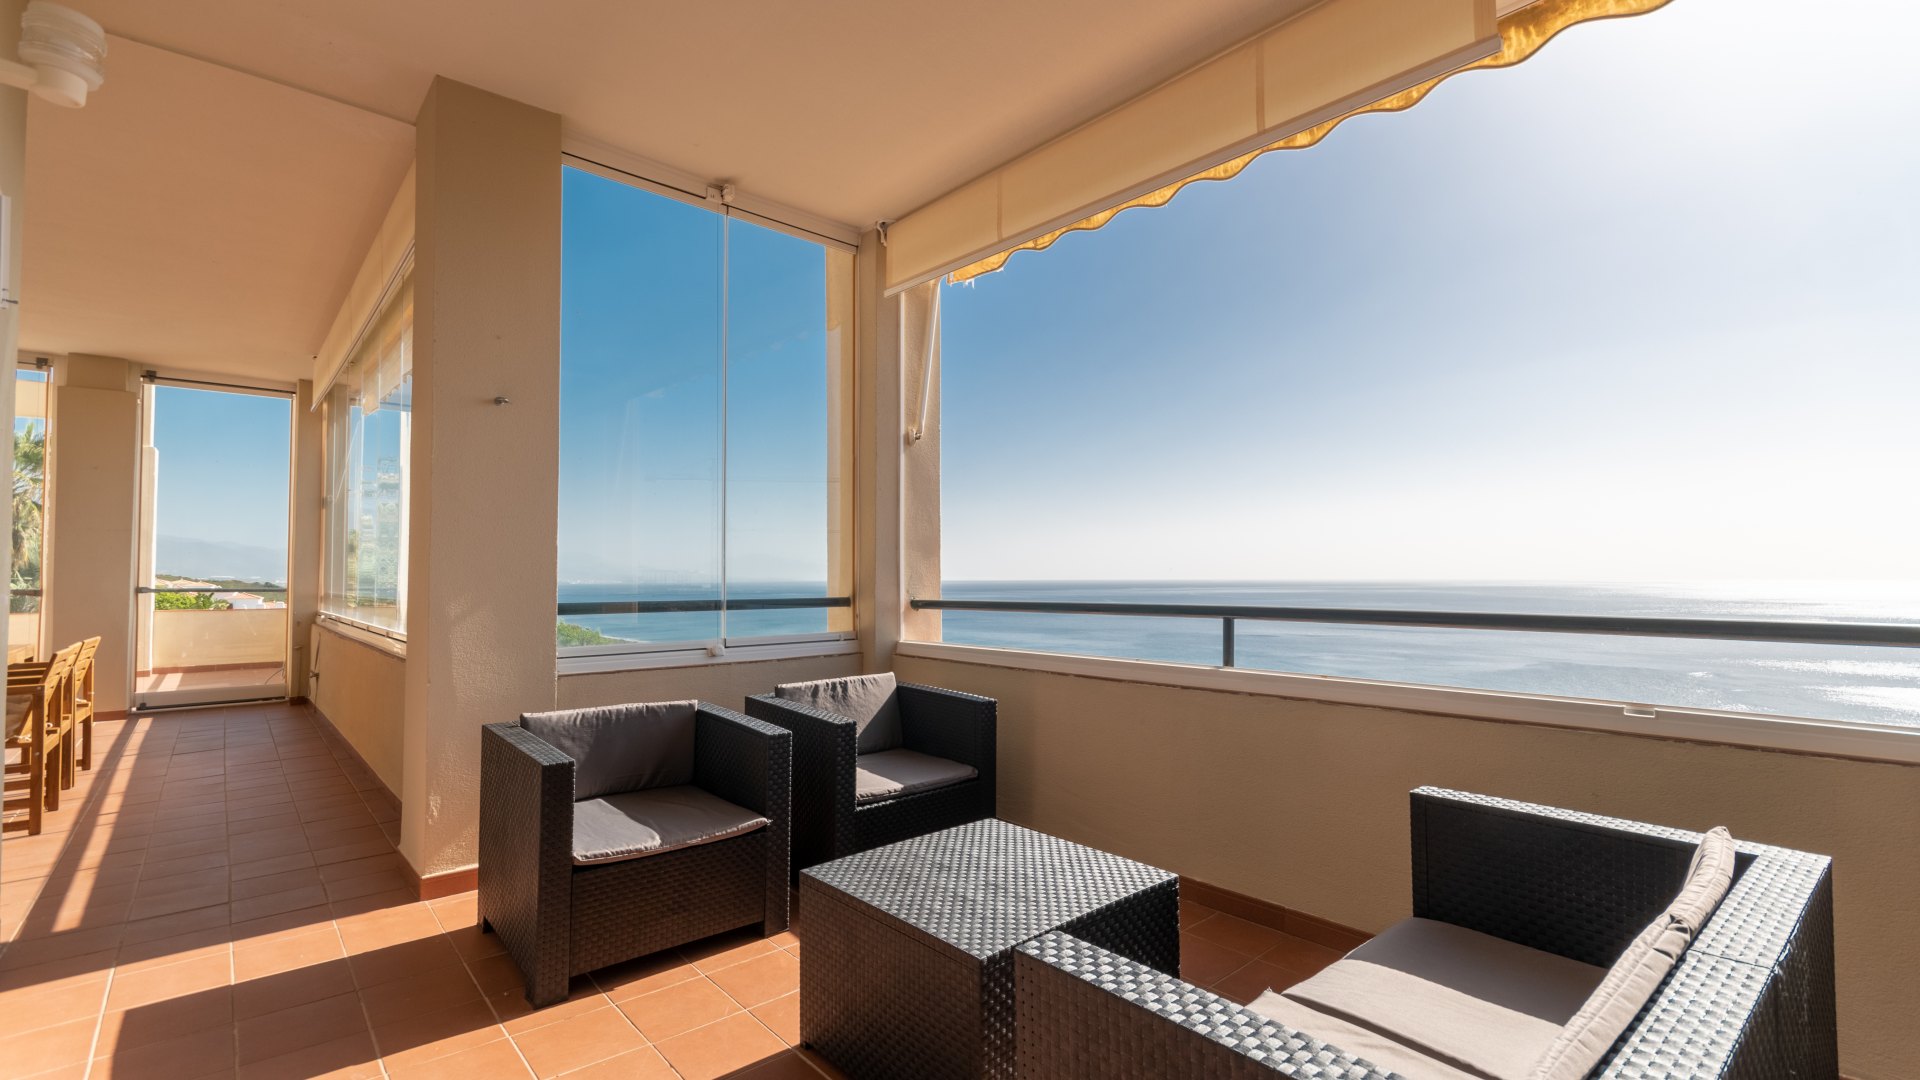 3 bedroom apartment with incredible sea views in Manilva